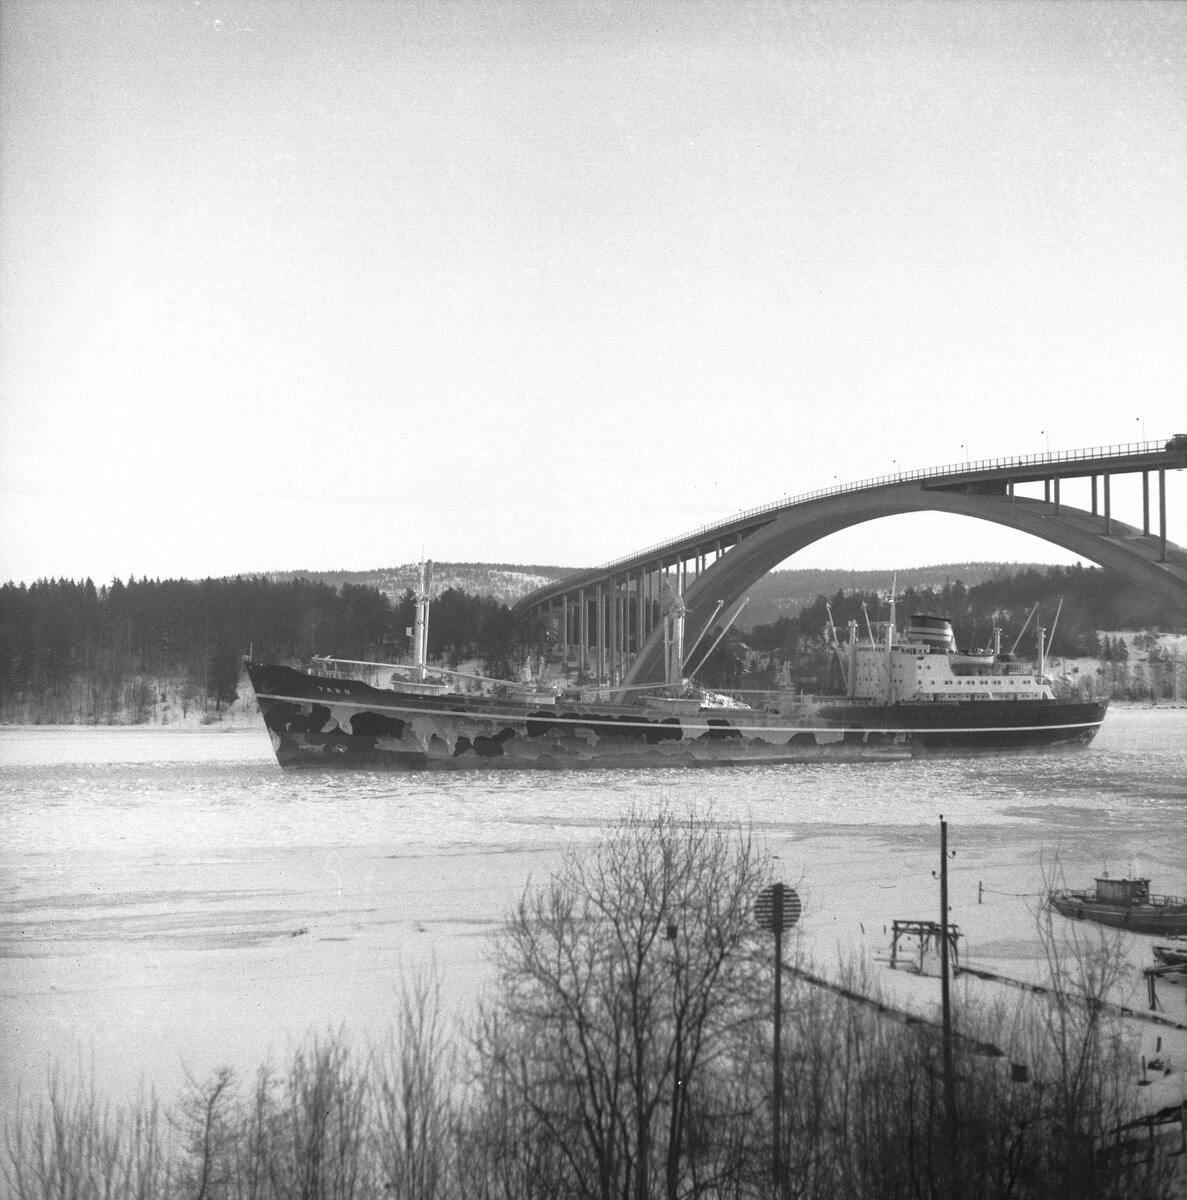 Fartyget Tarn vid Sandöbron

